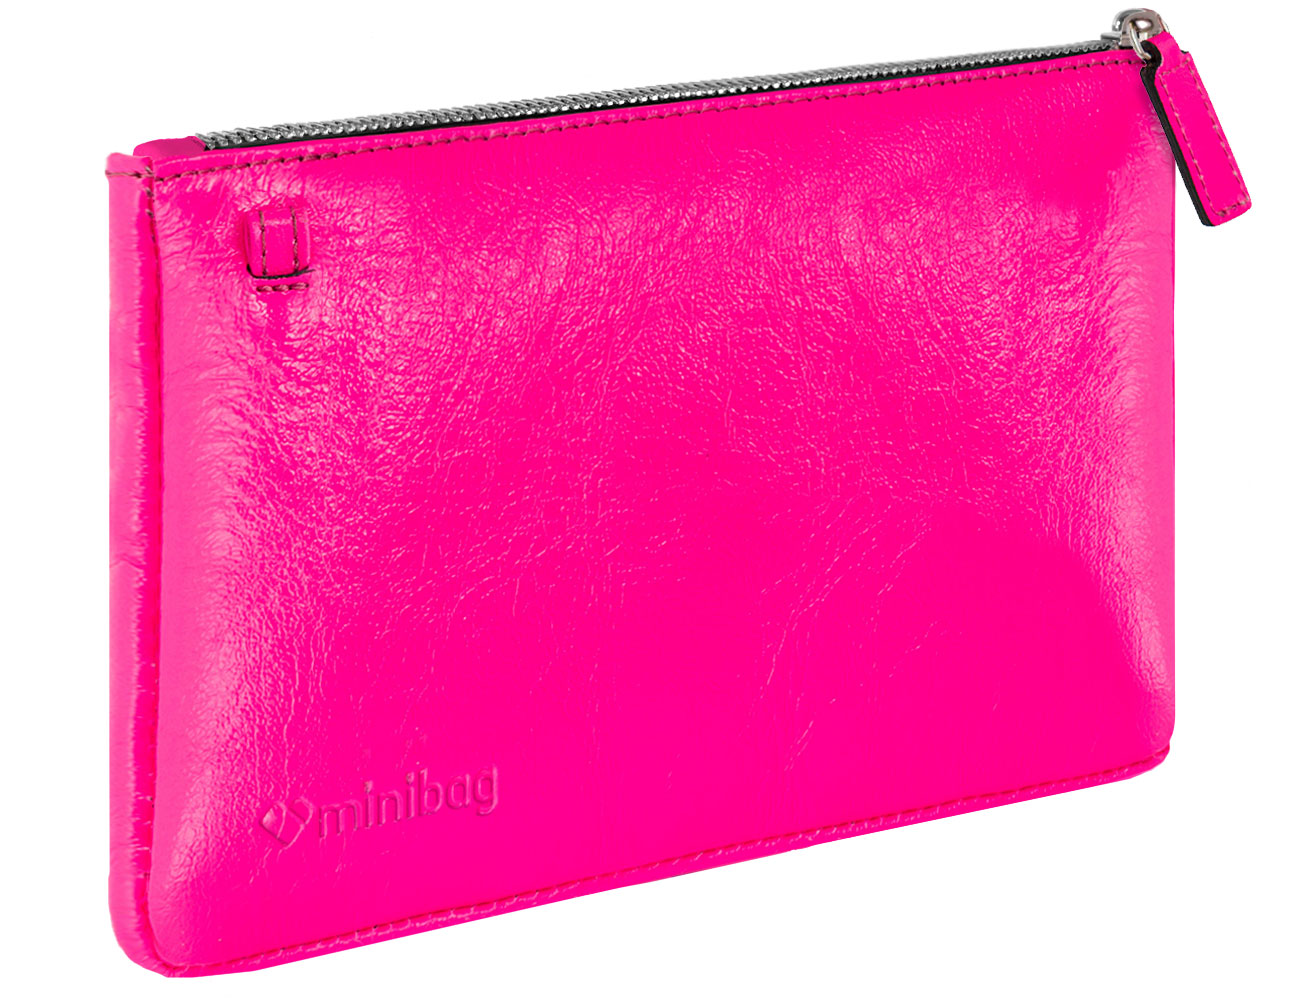 minibag neon pink, Ledertasche neon pink, Clutch neon pink, Geldtasche zum Umhängen, minibag neon